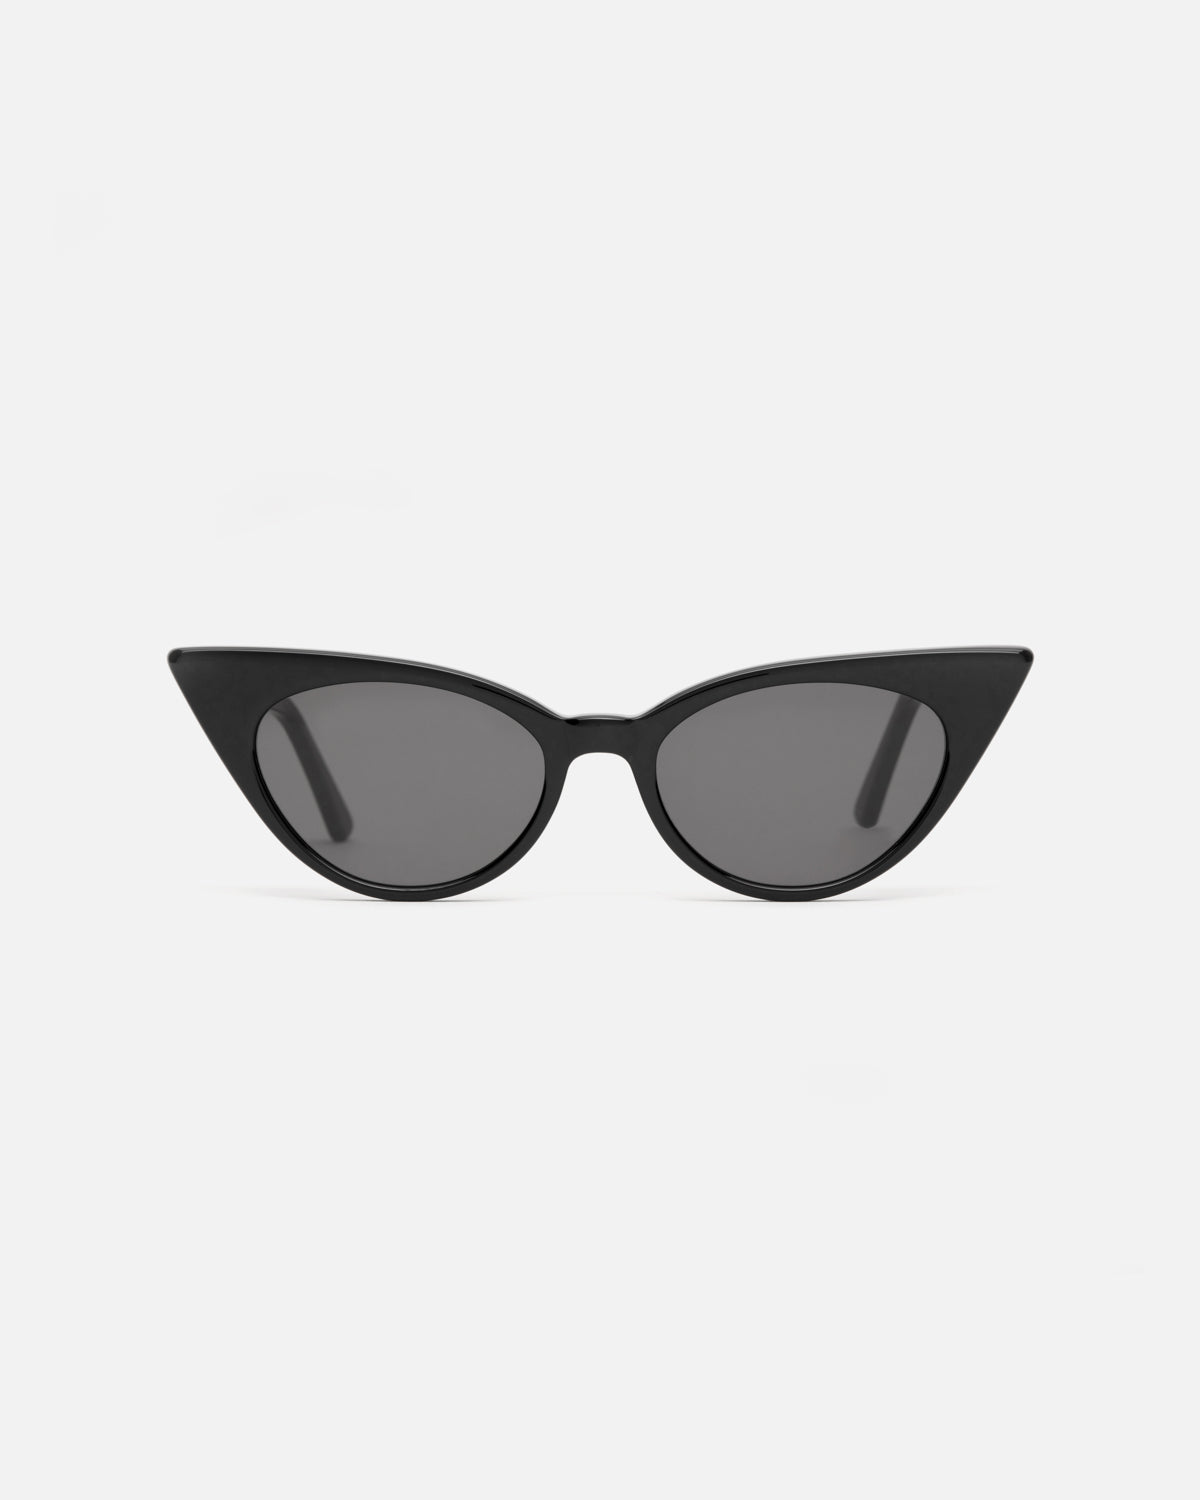 Lu Goldie Brigitte cat eye Sunglasses in black acetate with black lenses, front